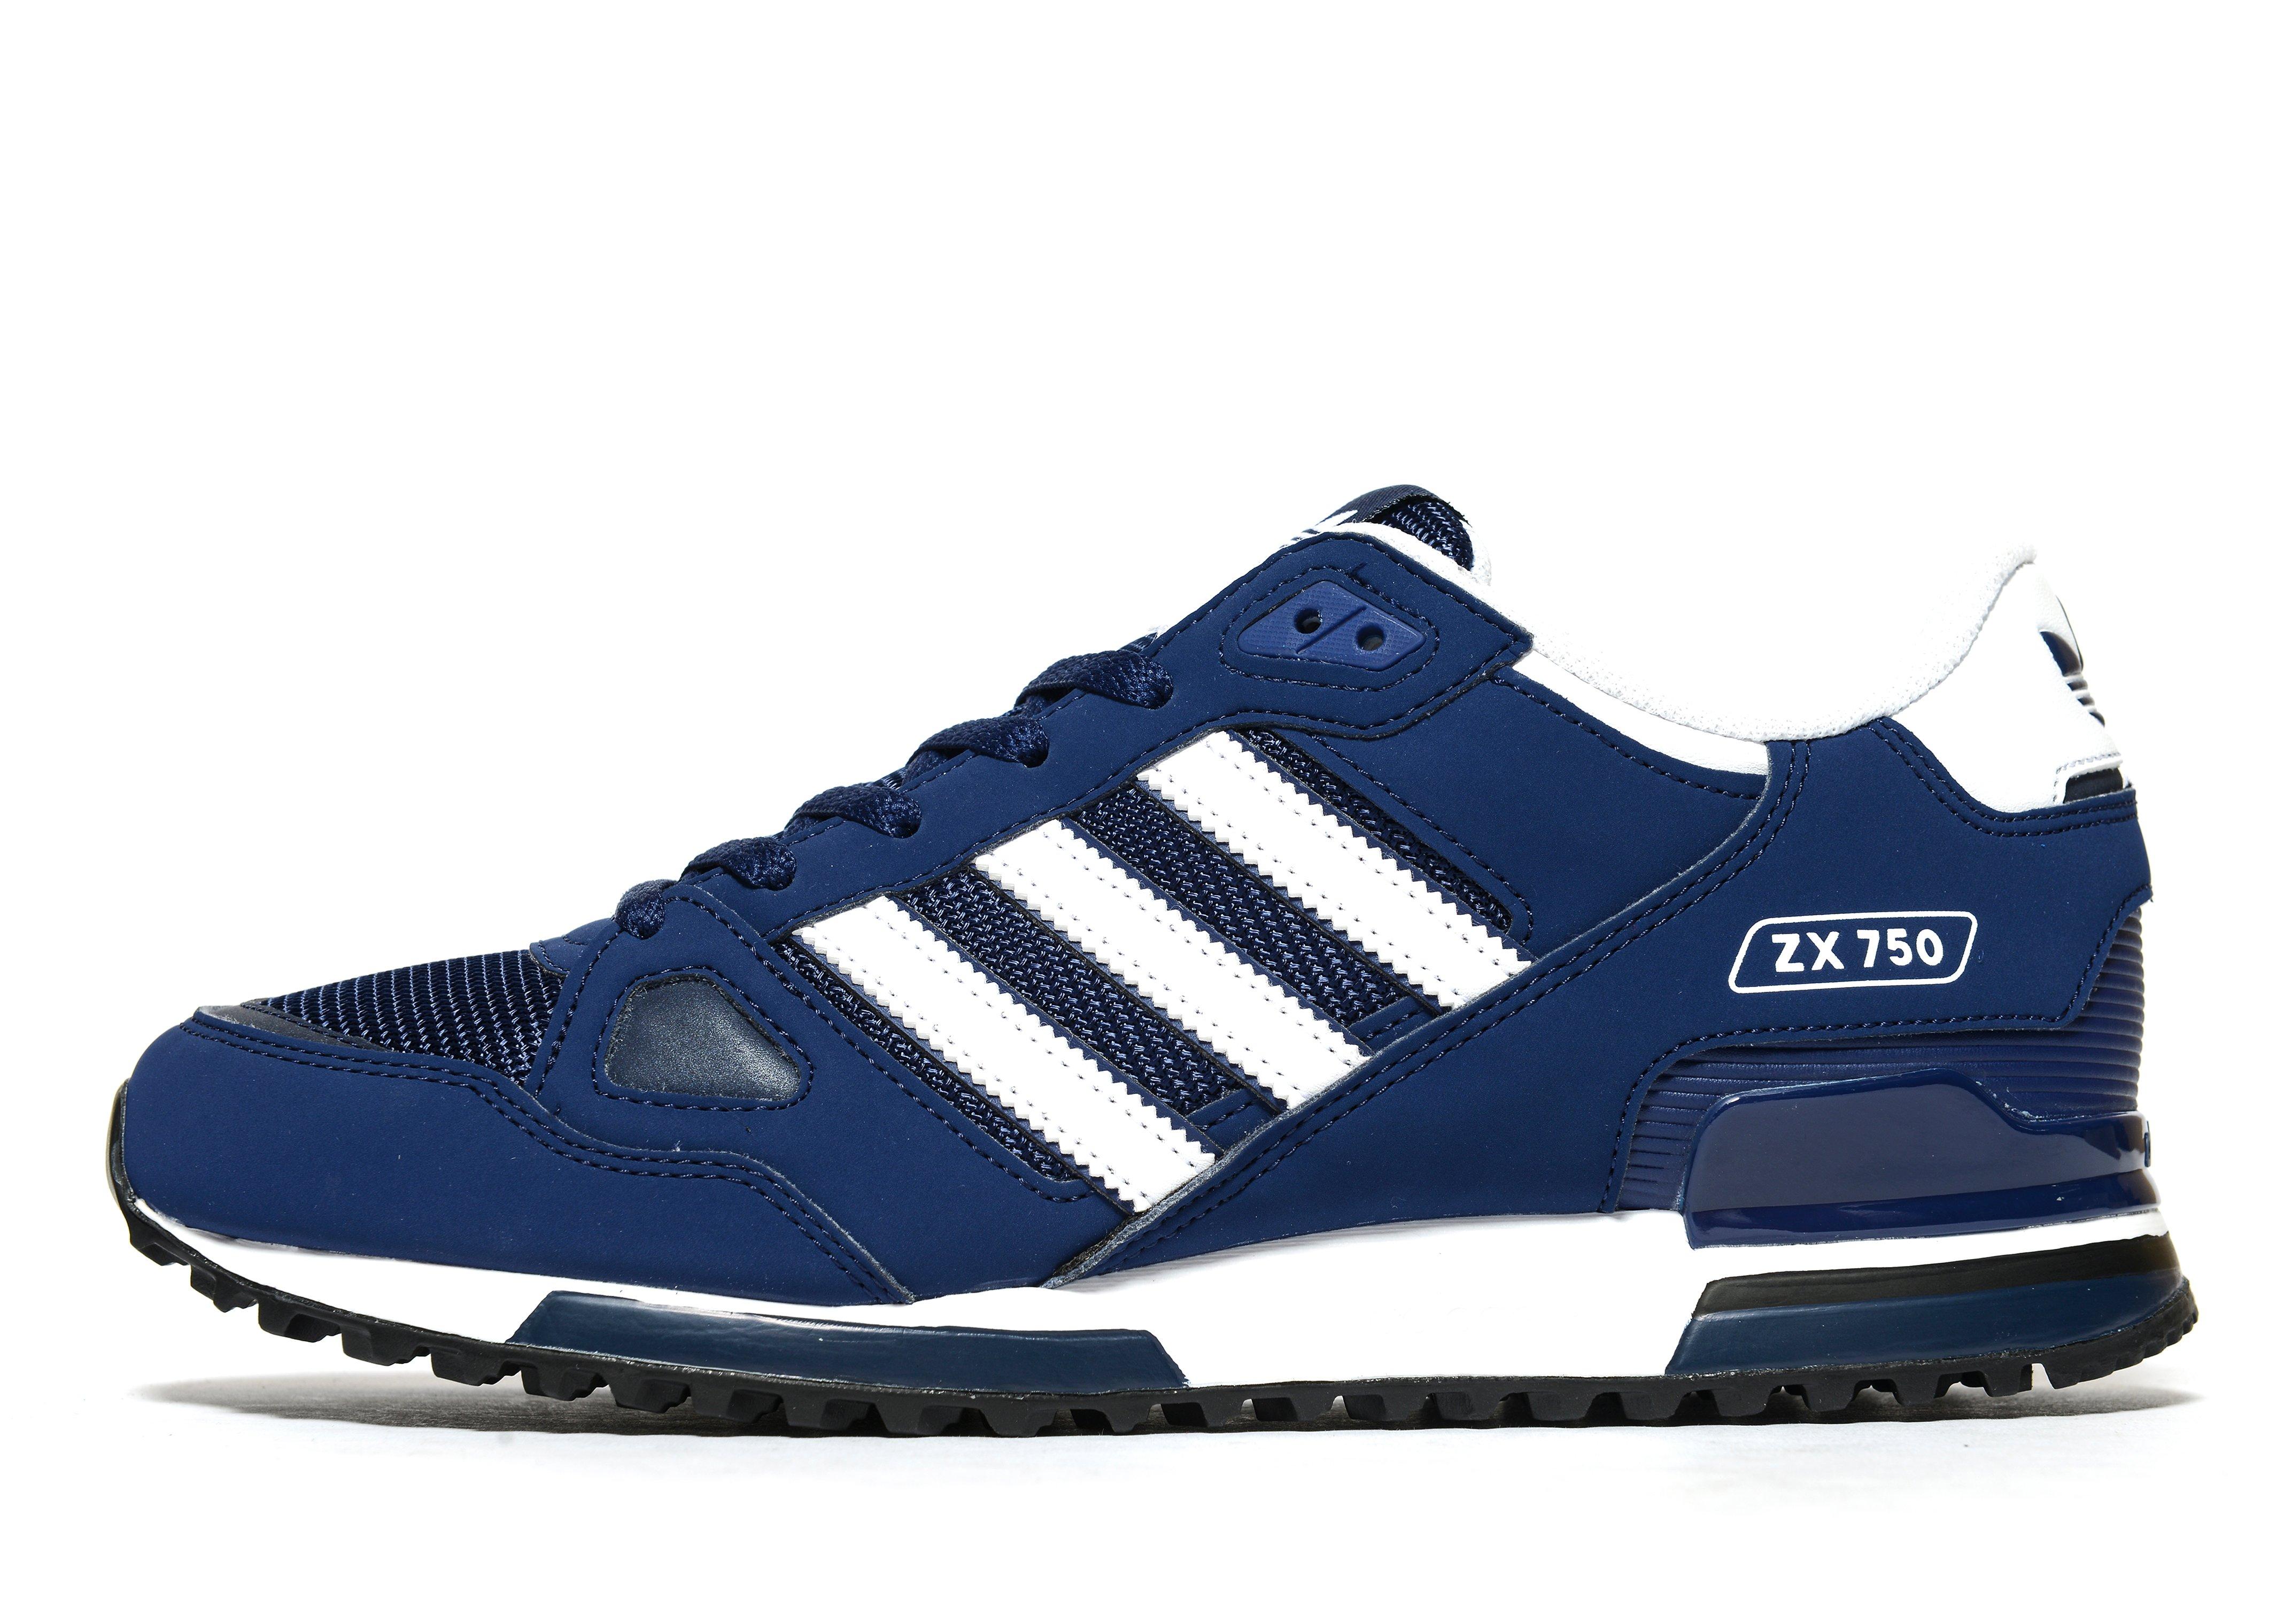 adidas zx750 blue